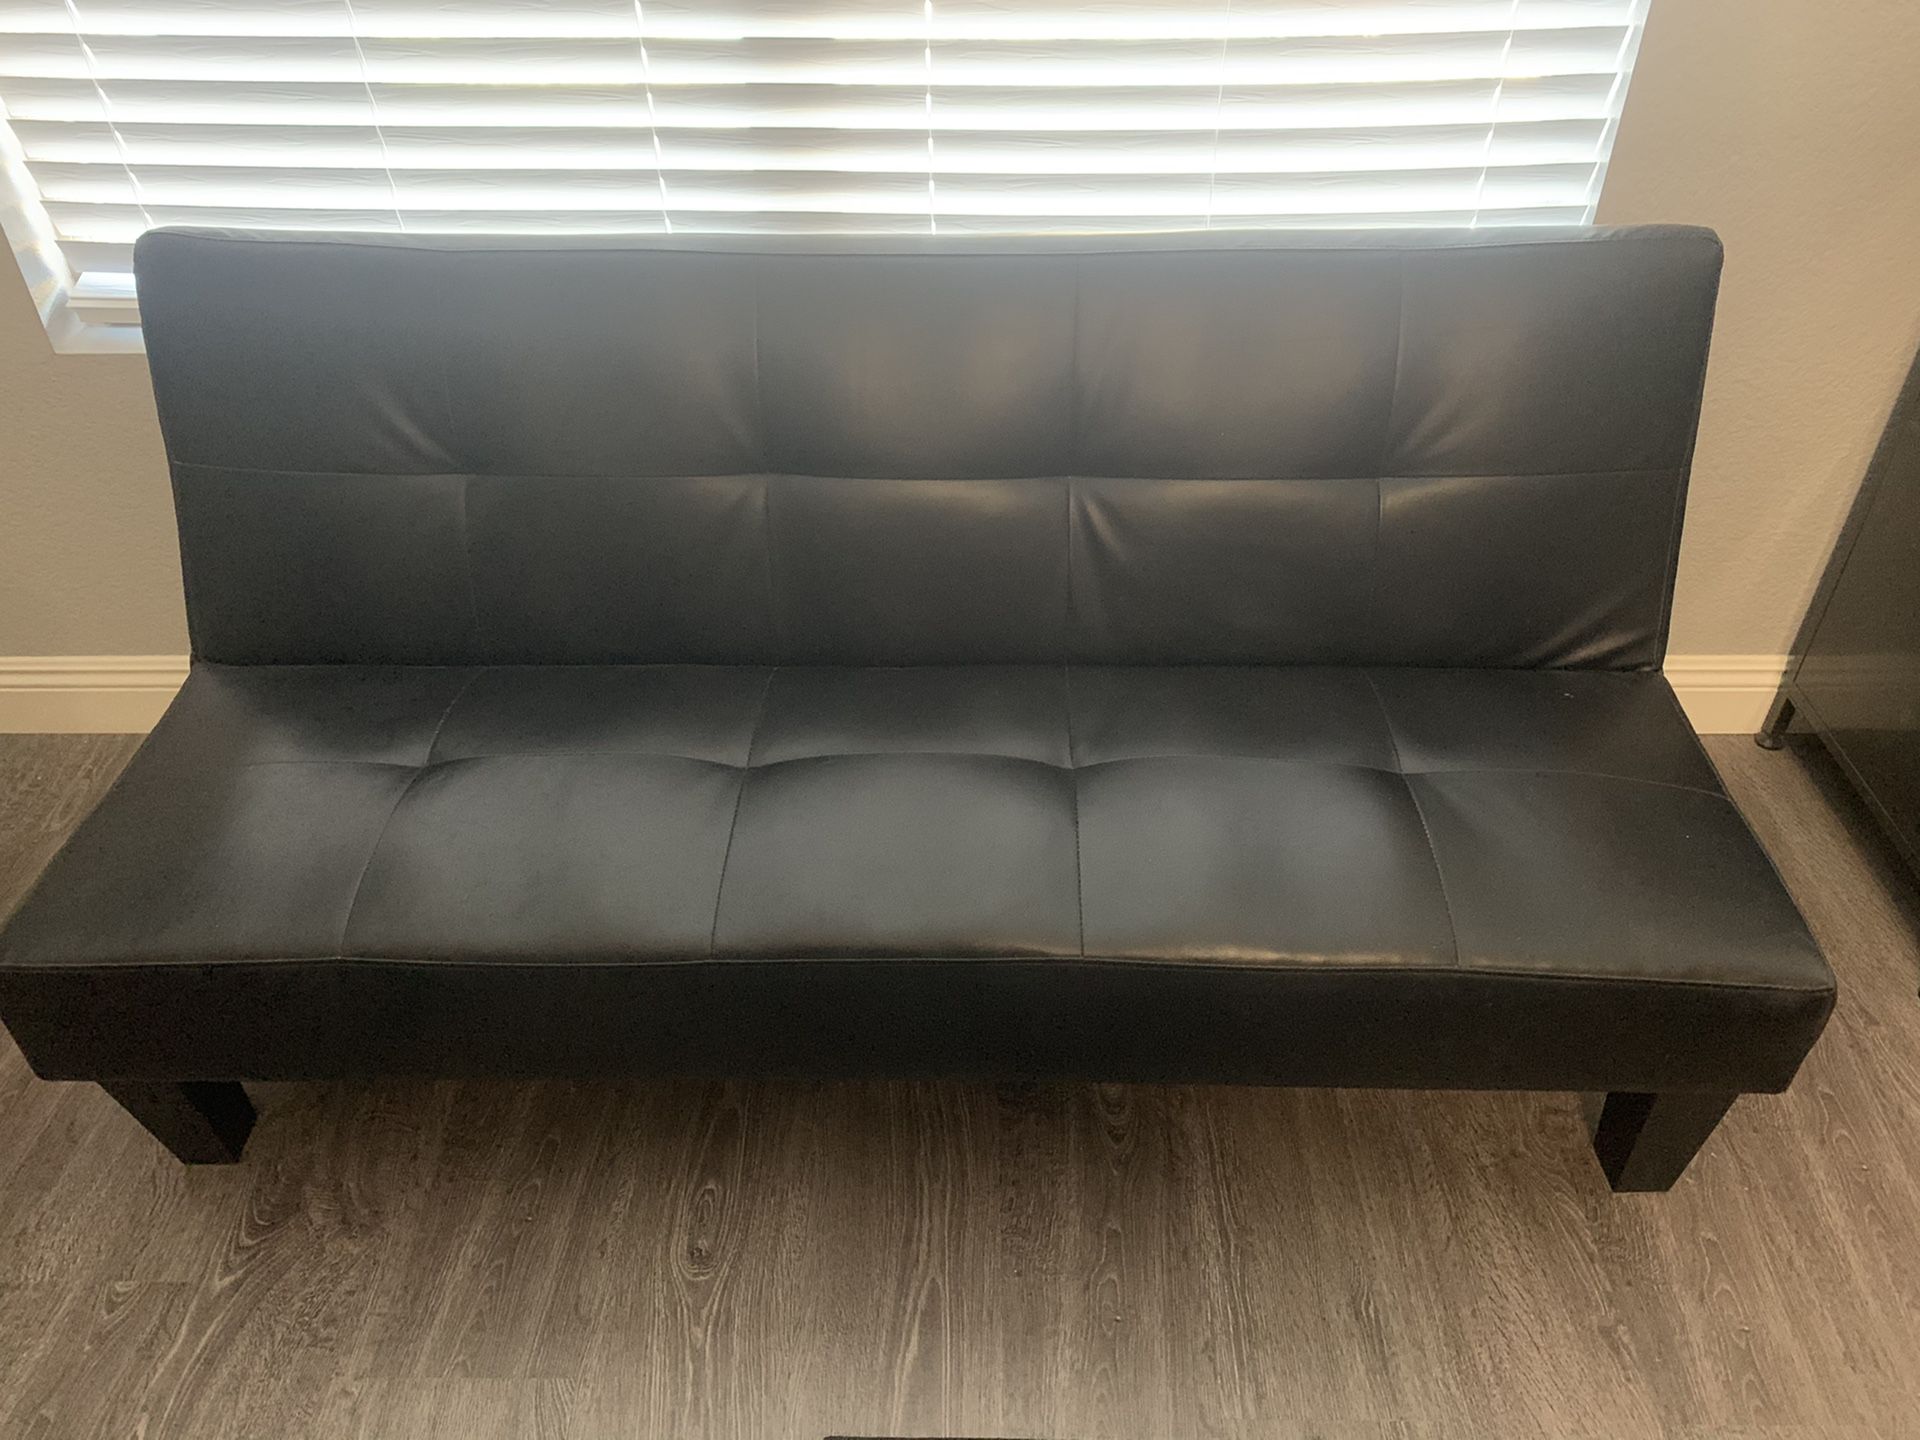 Faux leather futon